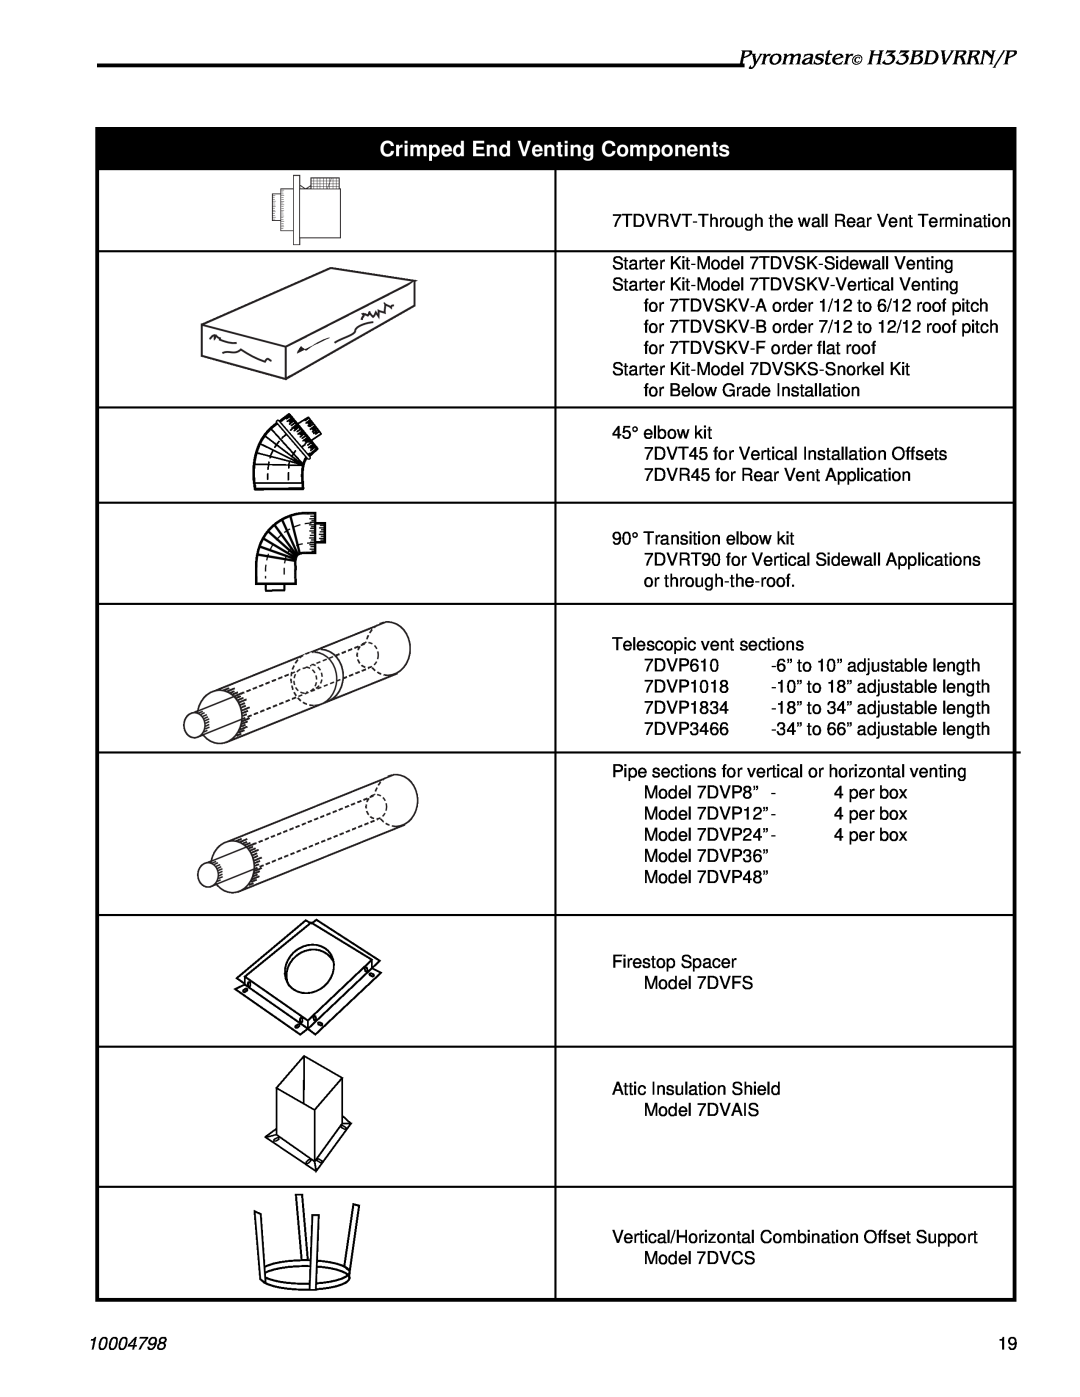 Vermont Casting H33BDVRRNP manual Crimped End Venting Components, Pyromaster H33BDVRRN/P, 10004798 